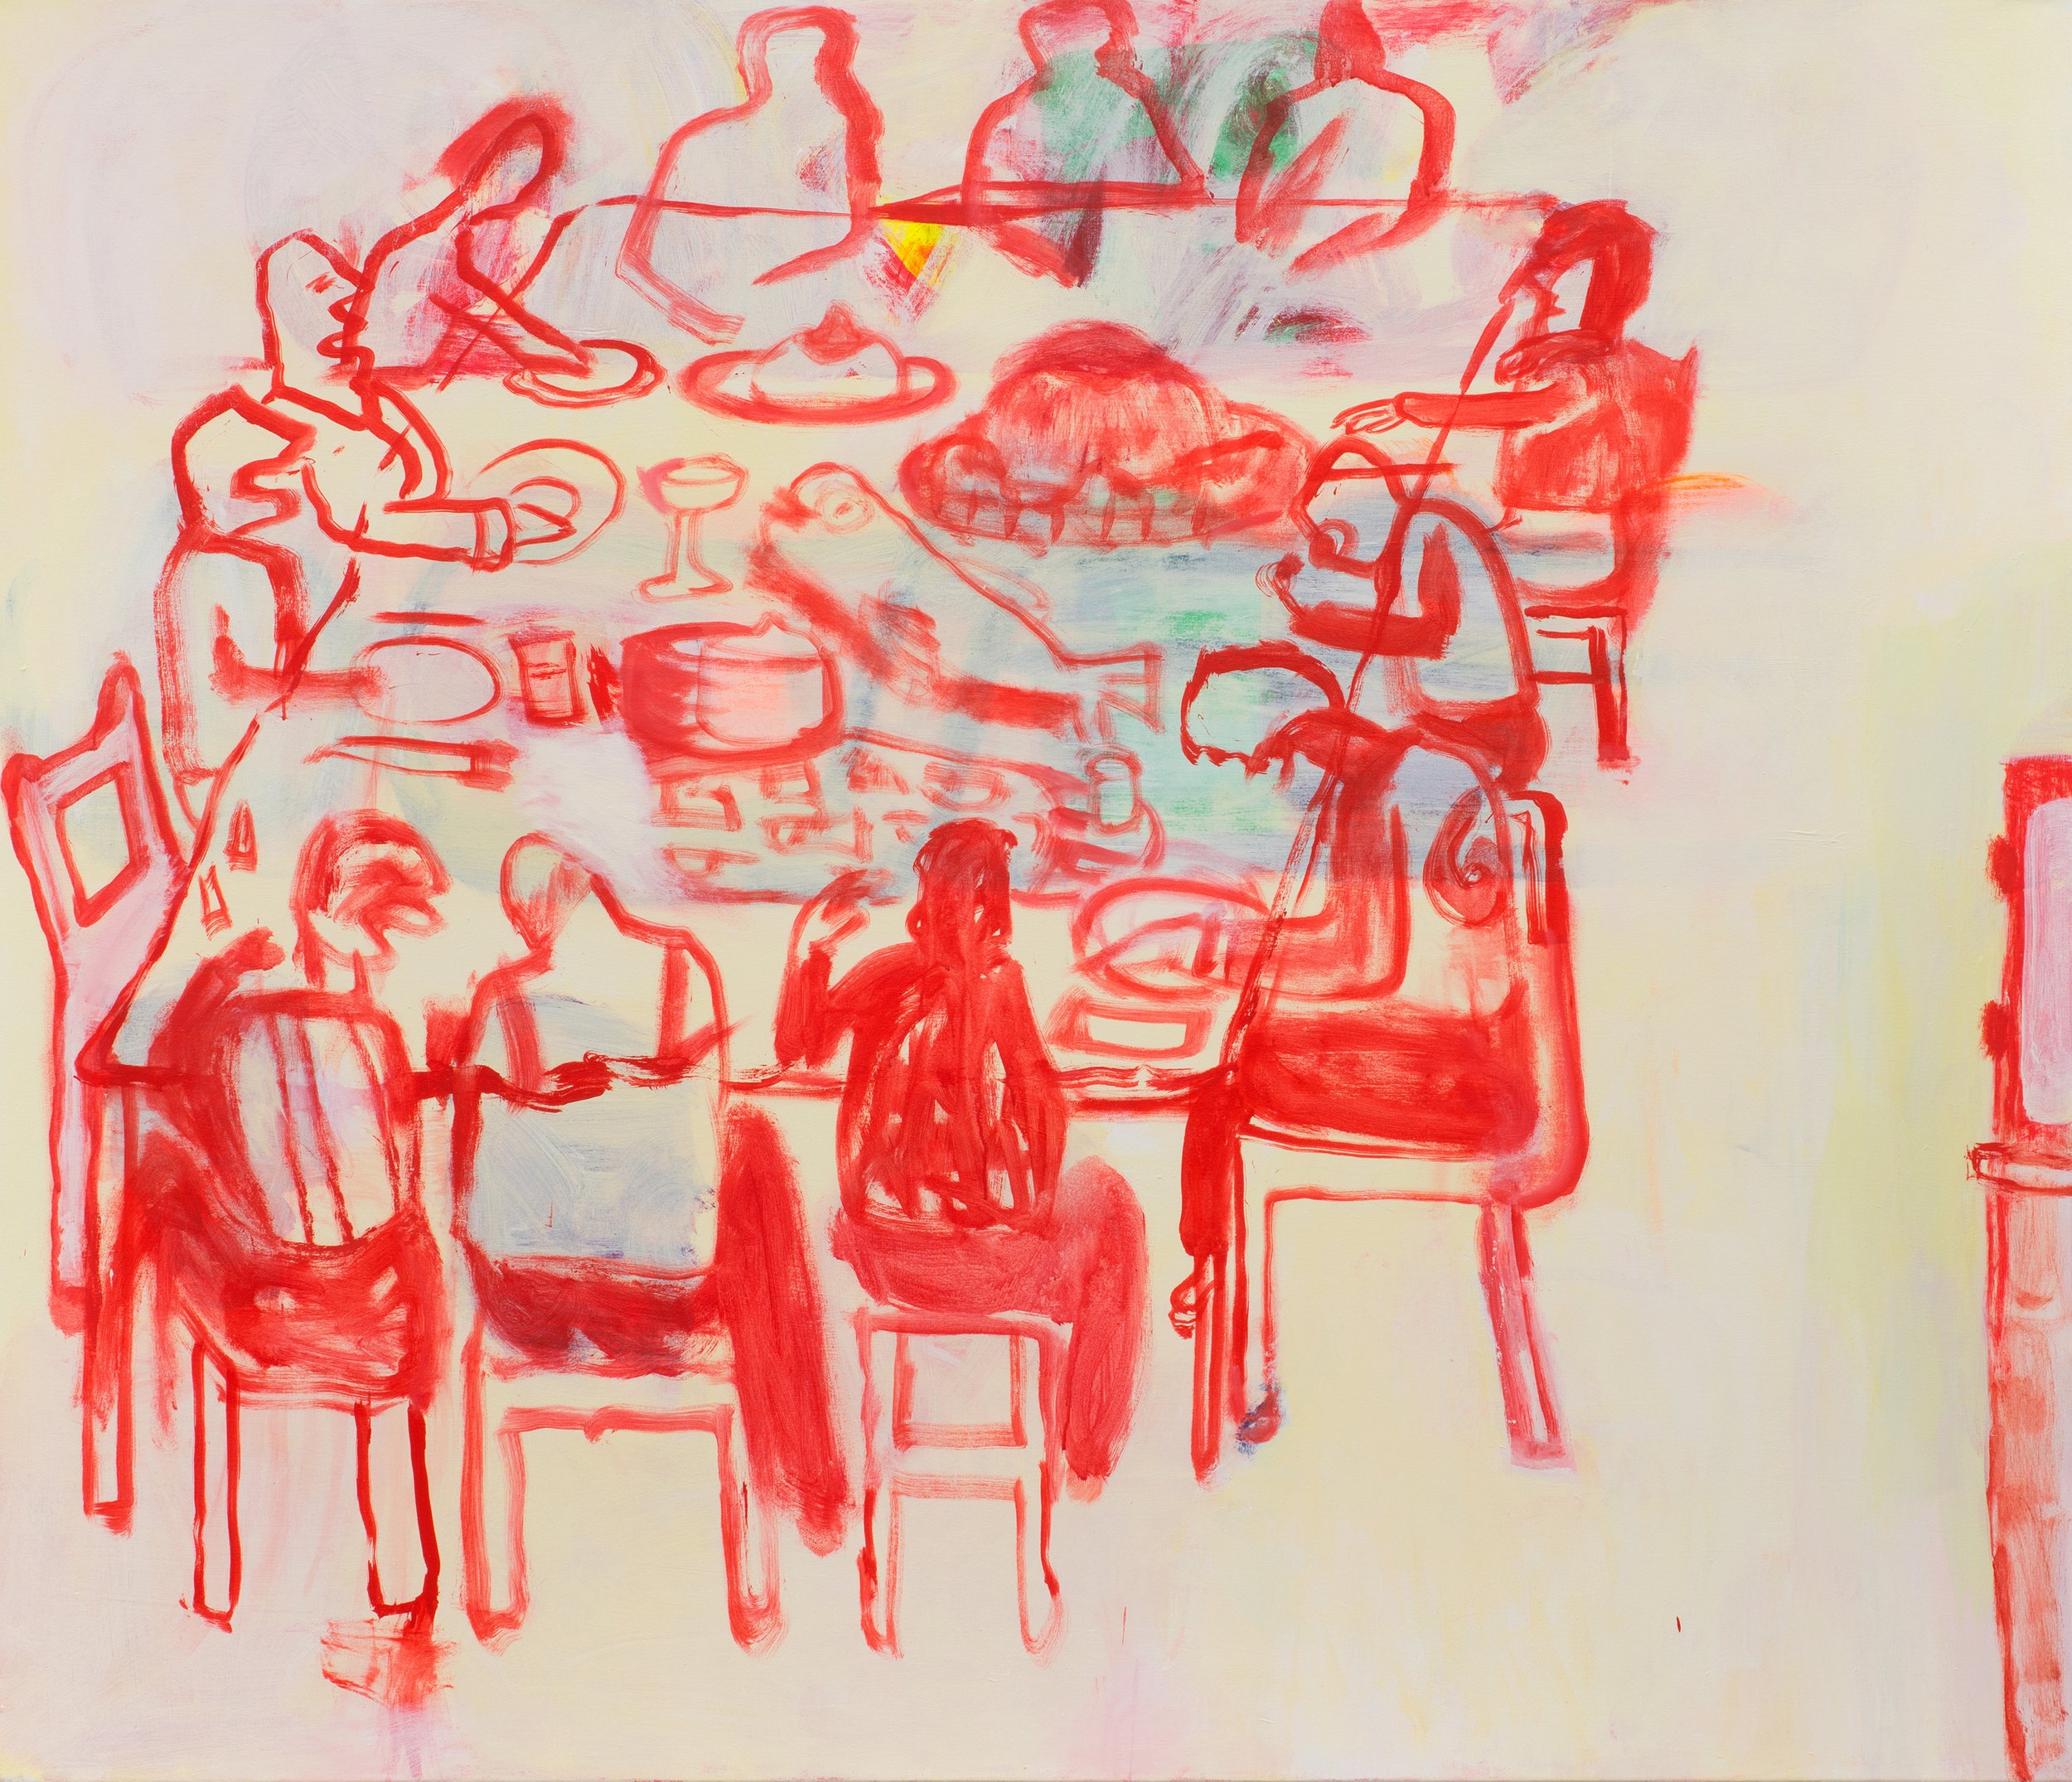  Katherine Bradford (United States, born 1942),  Lunch Painting , 2018, acrylic on canvas, 68 x 80 inches. The Collection of Edwin Oostmeijer © Katherine Bradford. Image courtesy Joe DeNardo  